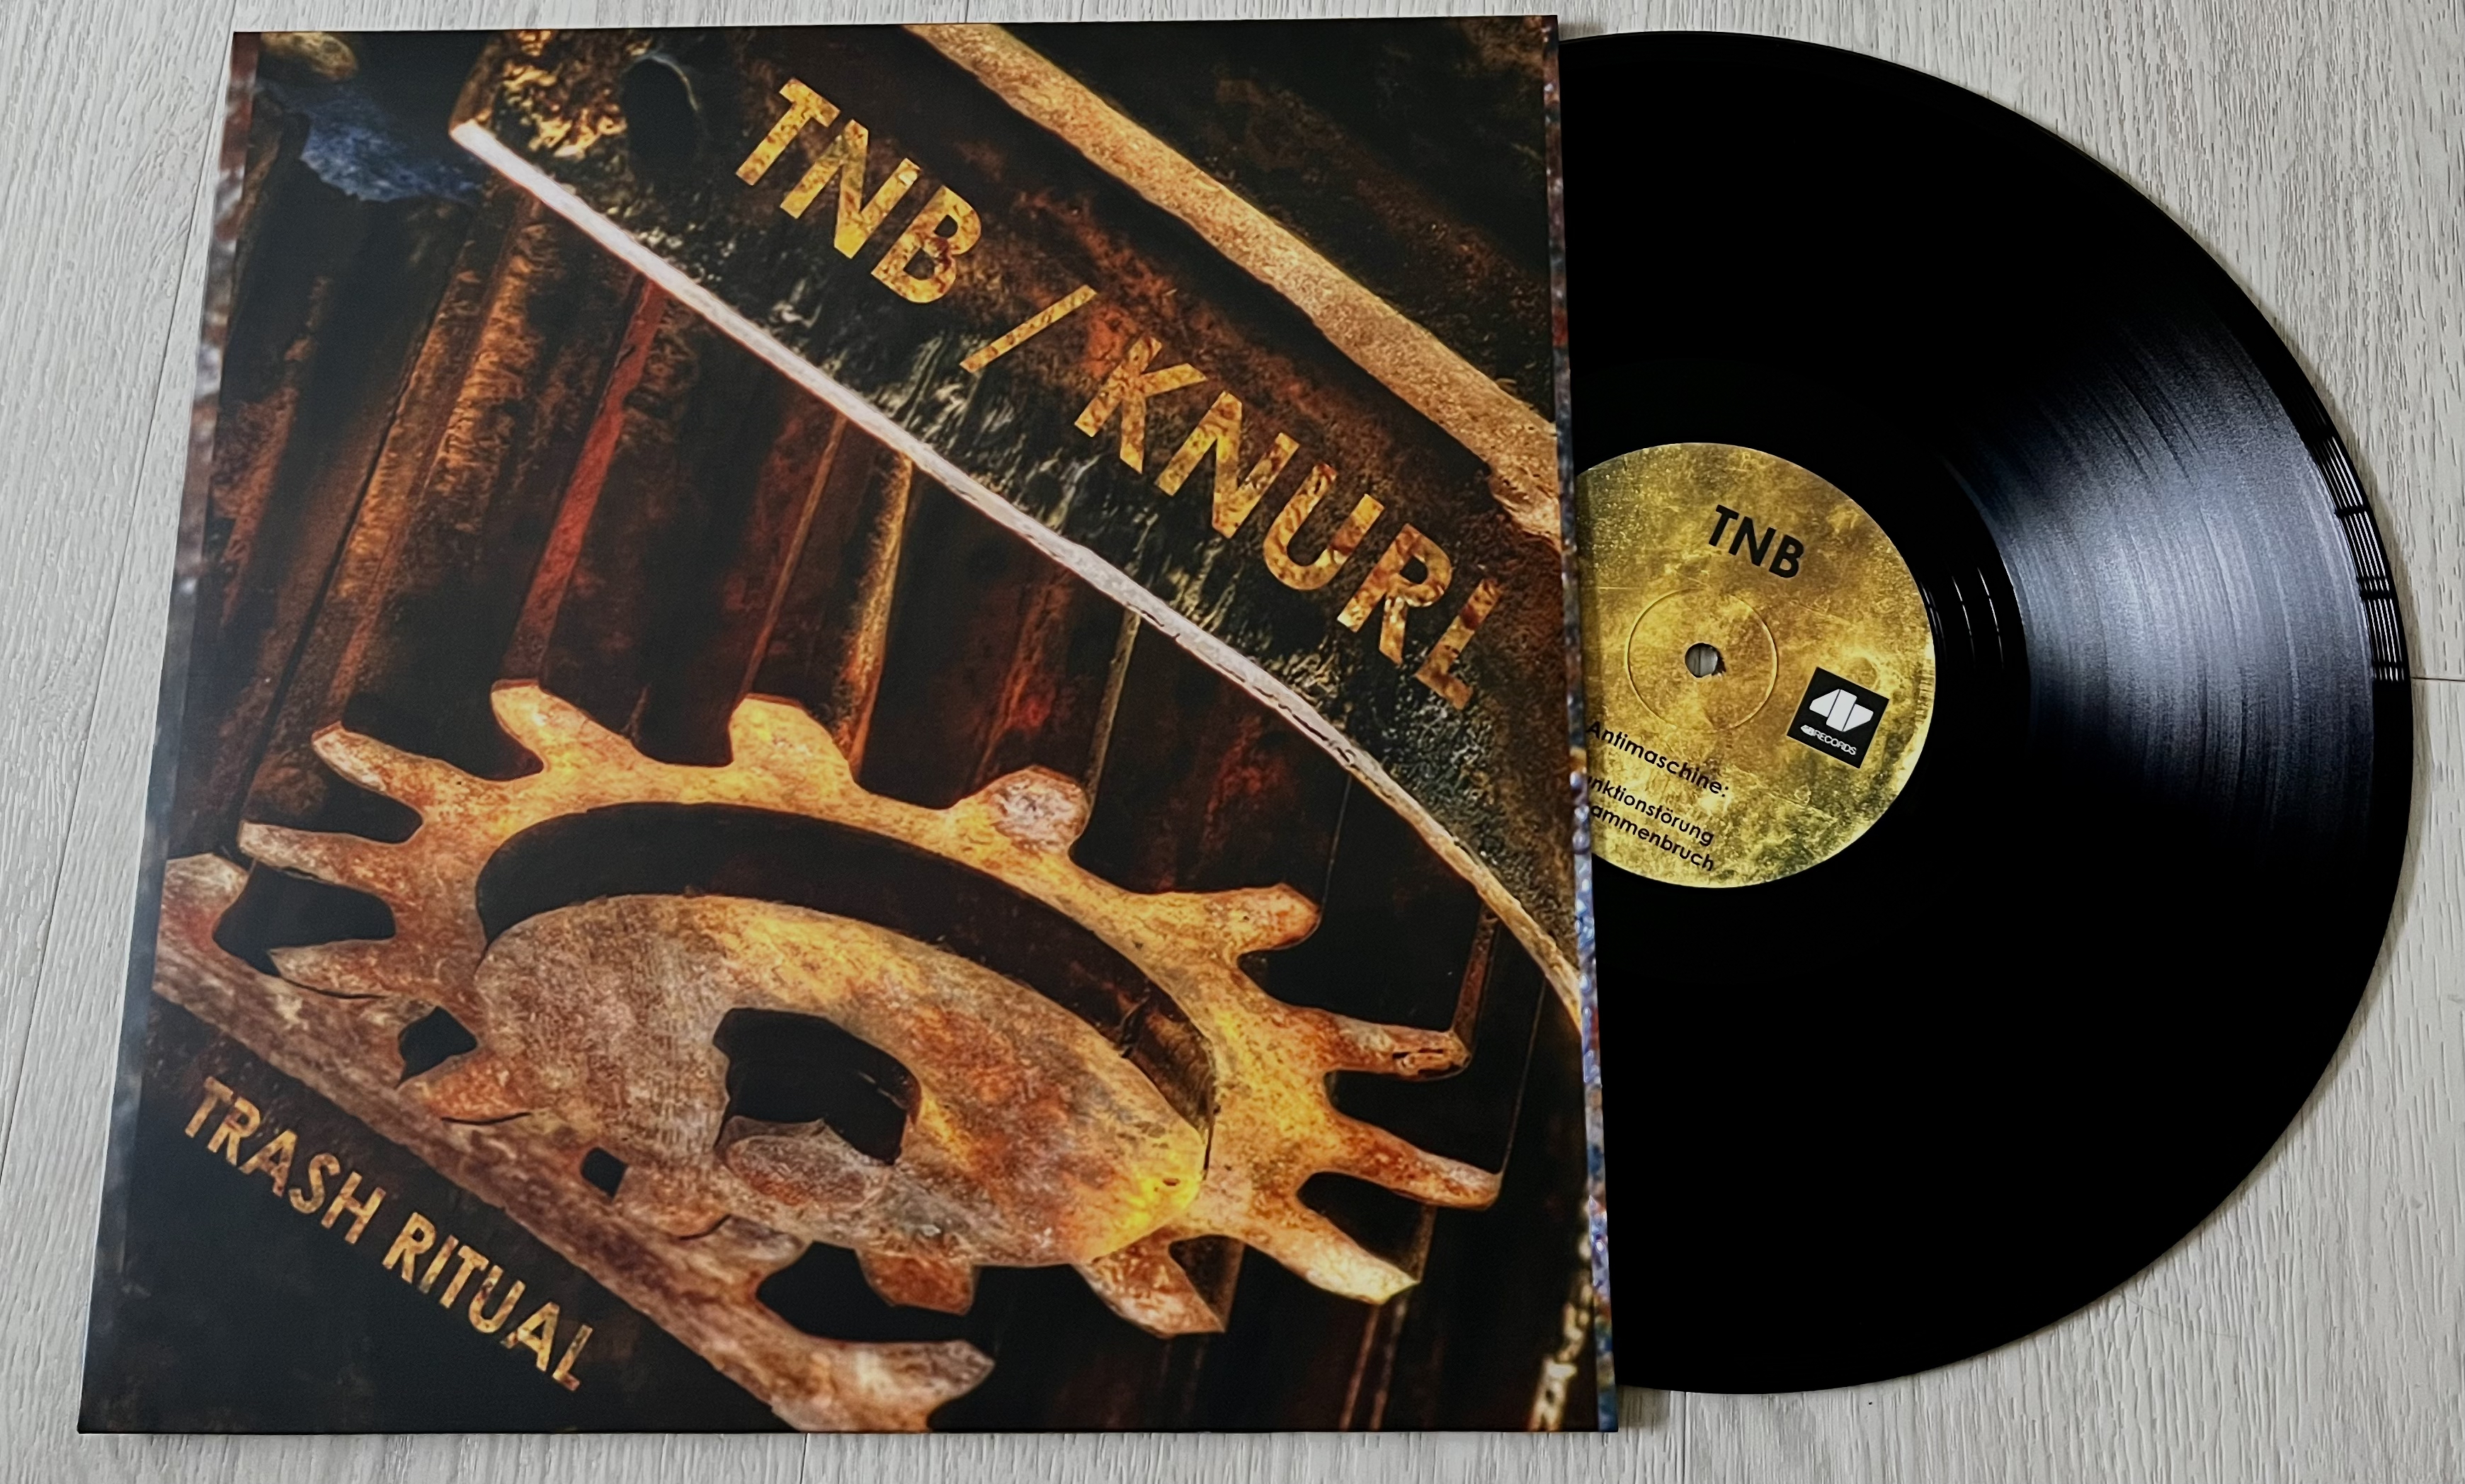 The New Blockaders : Knurl - Trash Ritual LP (Front)